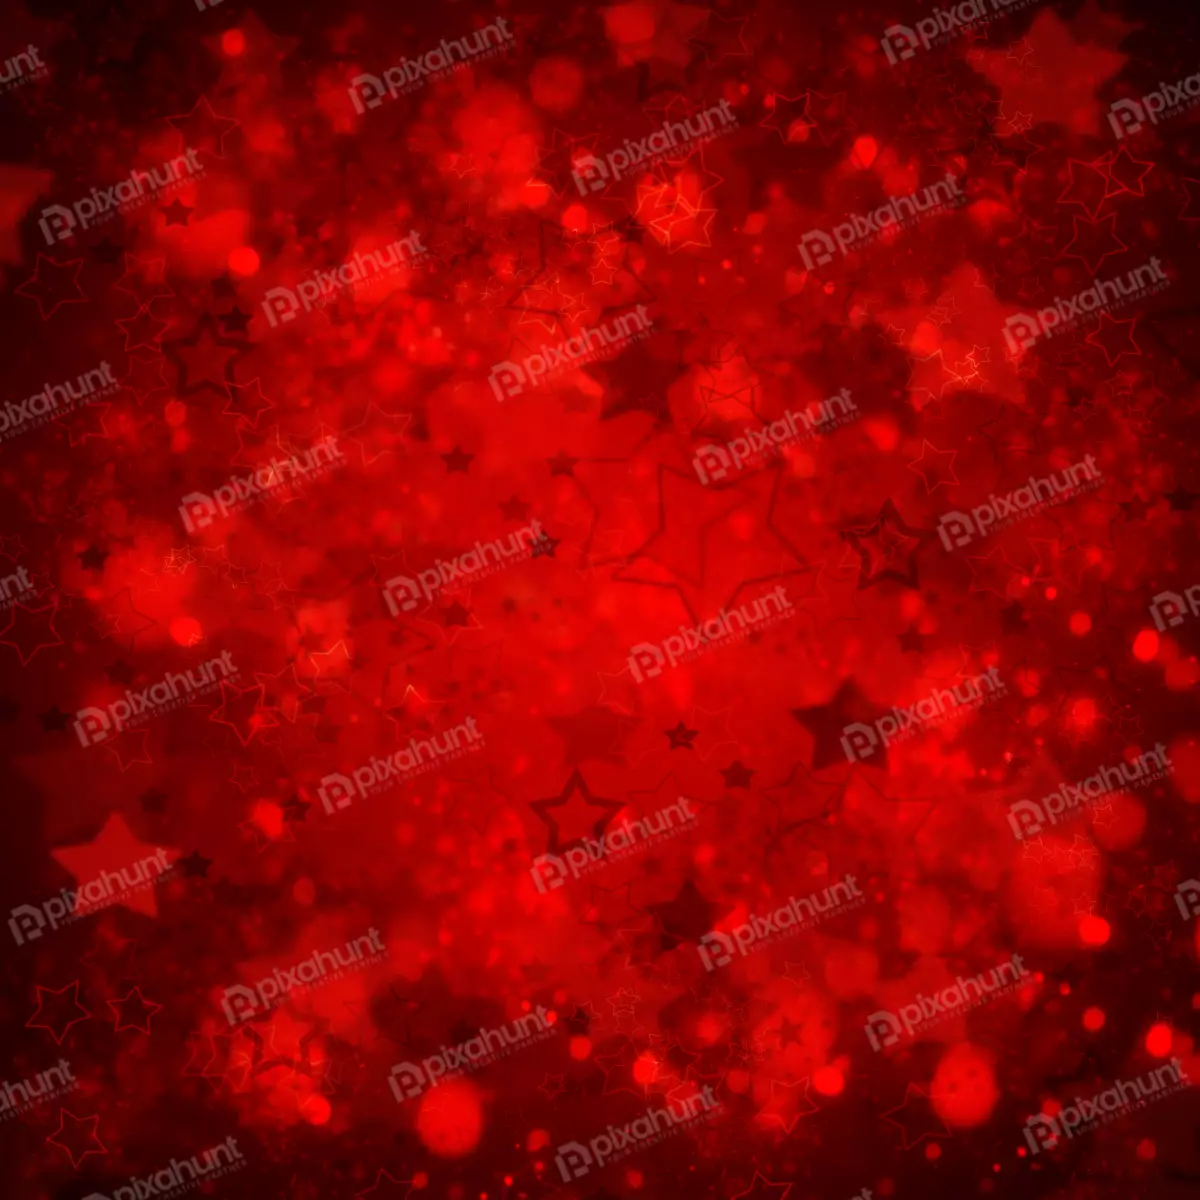 Free Premium Stock Photos Christmas Red Background | Christmas Dark Red Background With Star Stains Photo